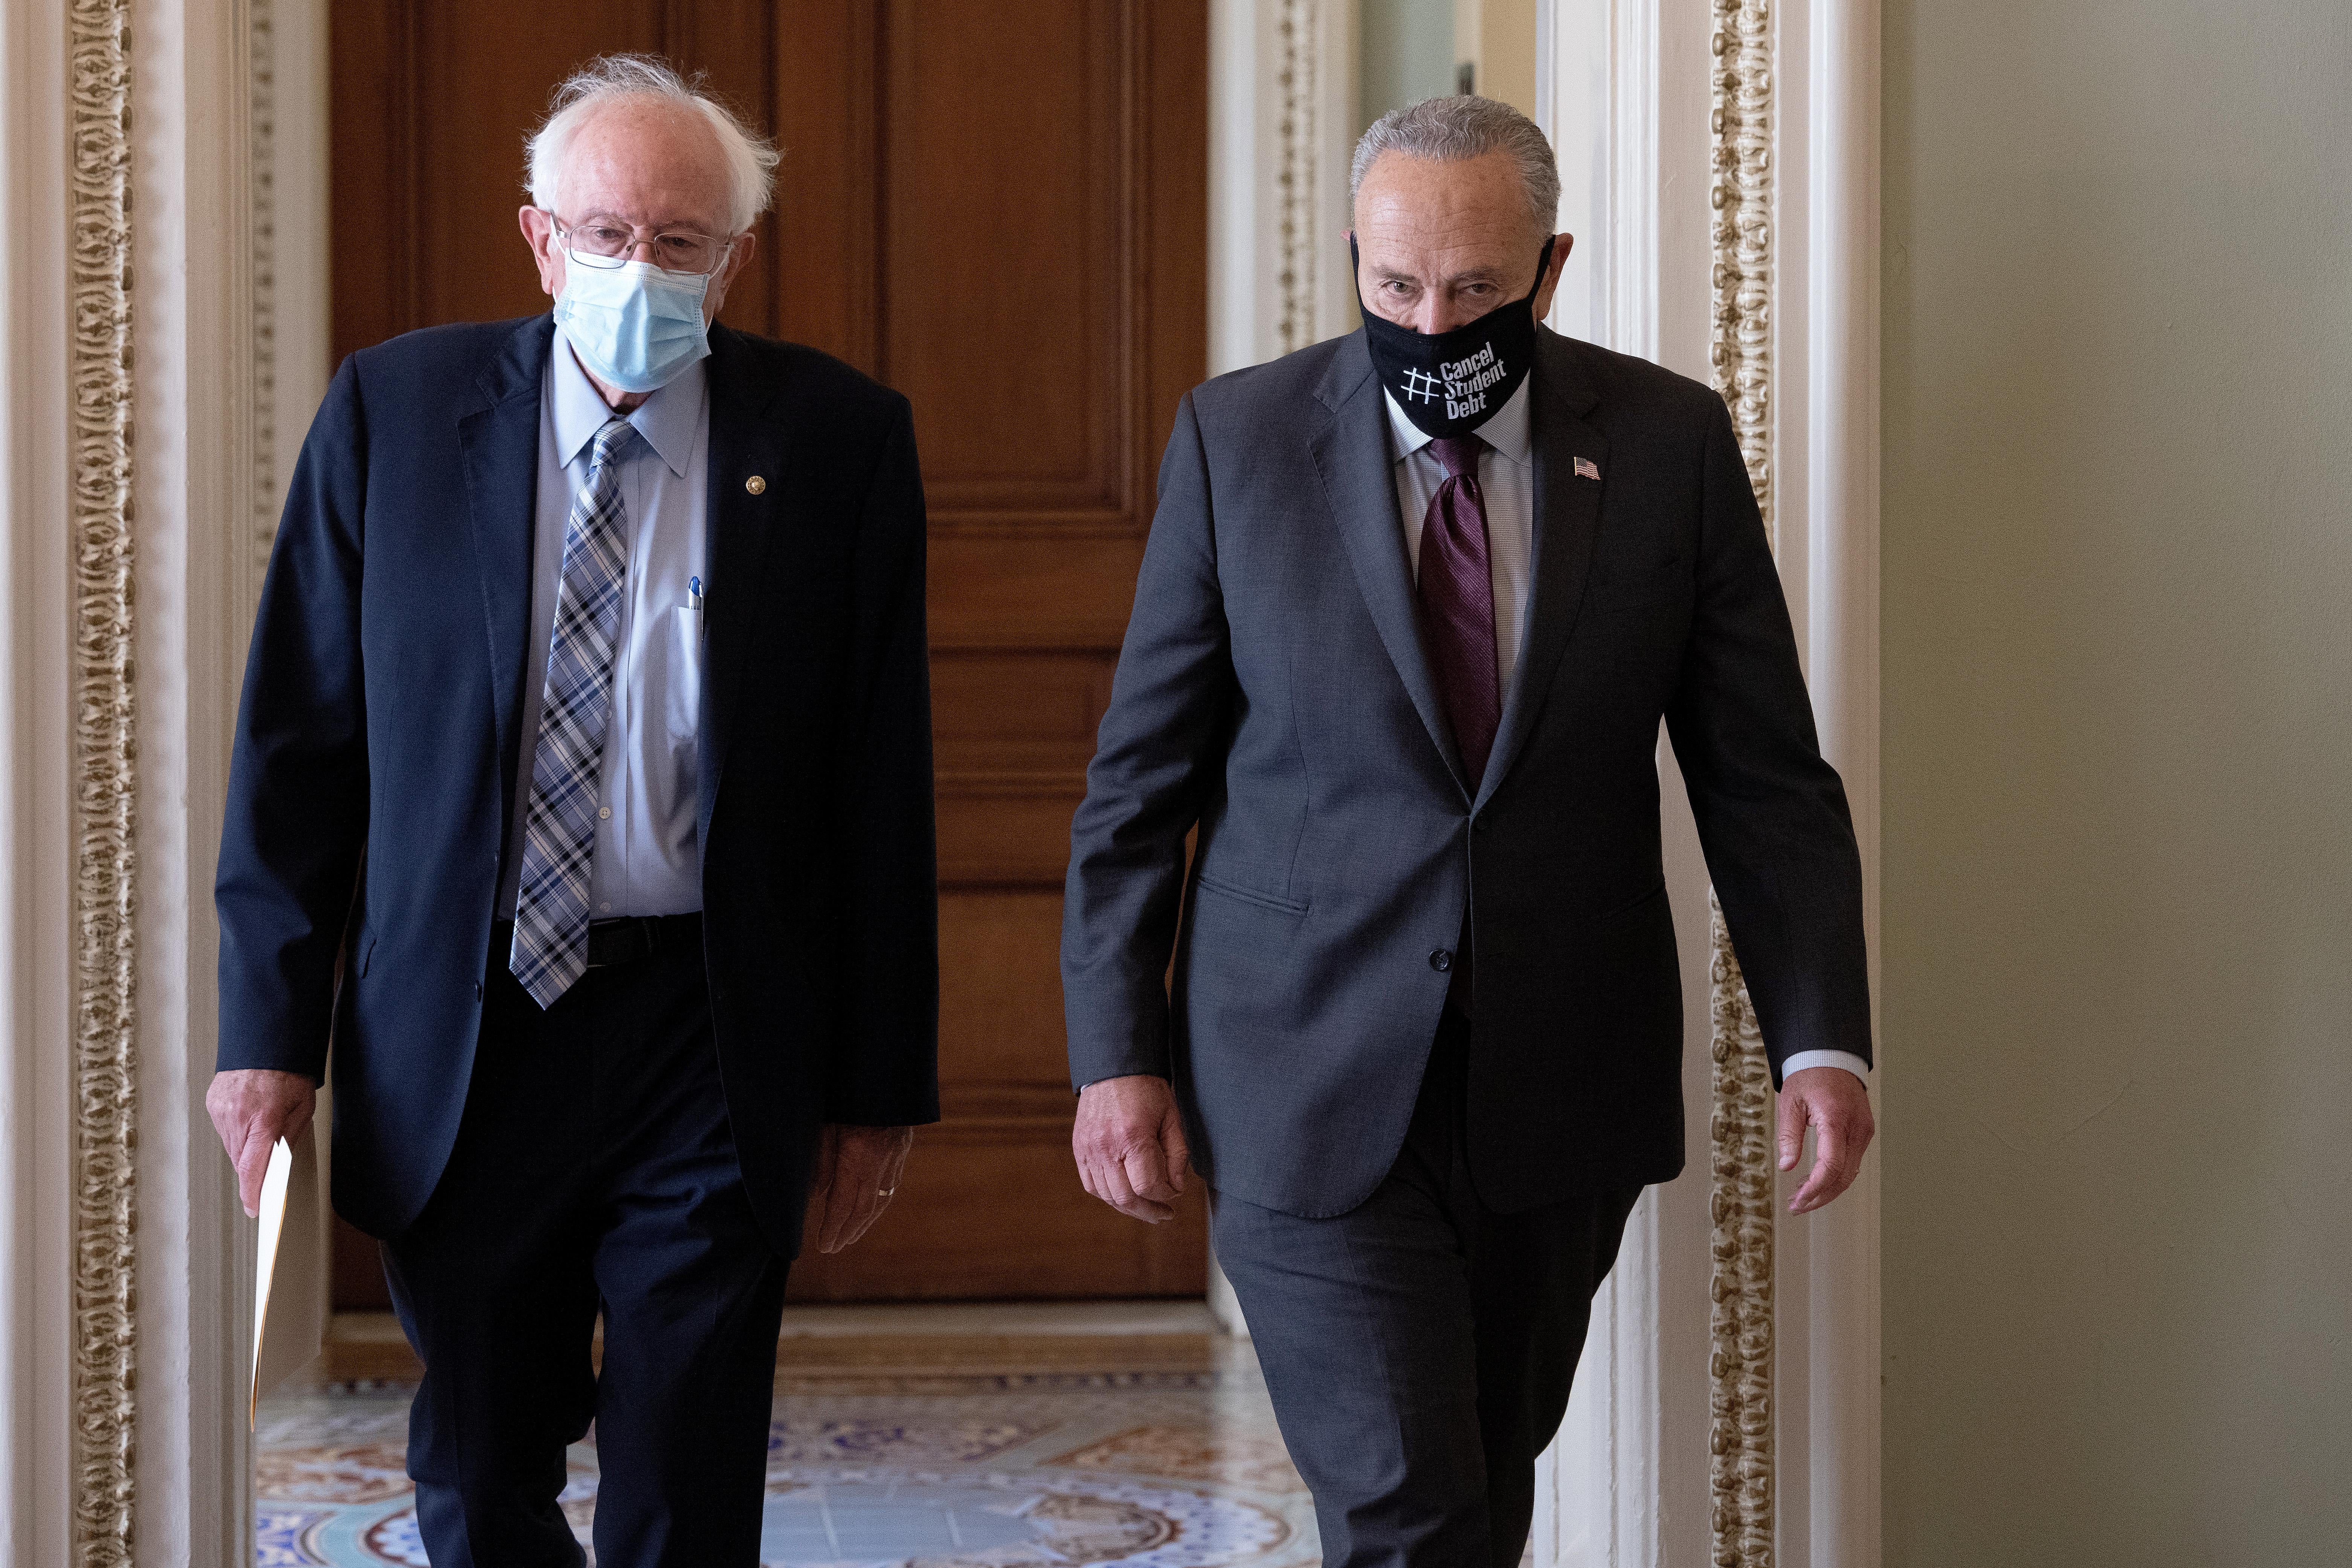 Bernie Sanders and Chuck Schumer walk side by side in a hallway, both wearing masks